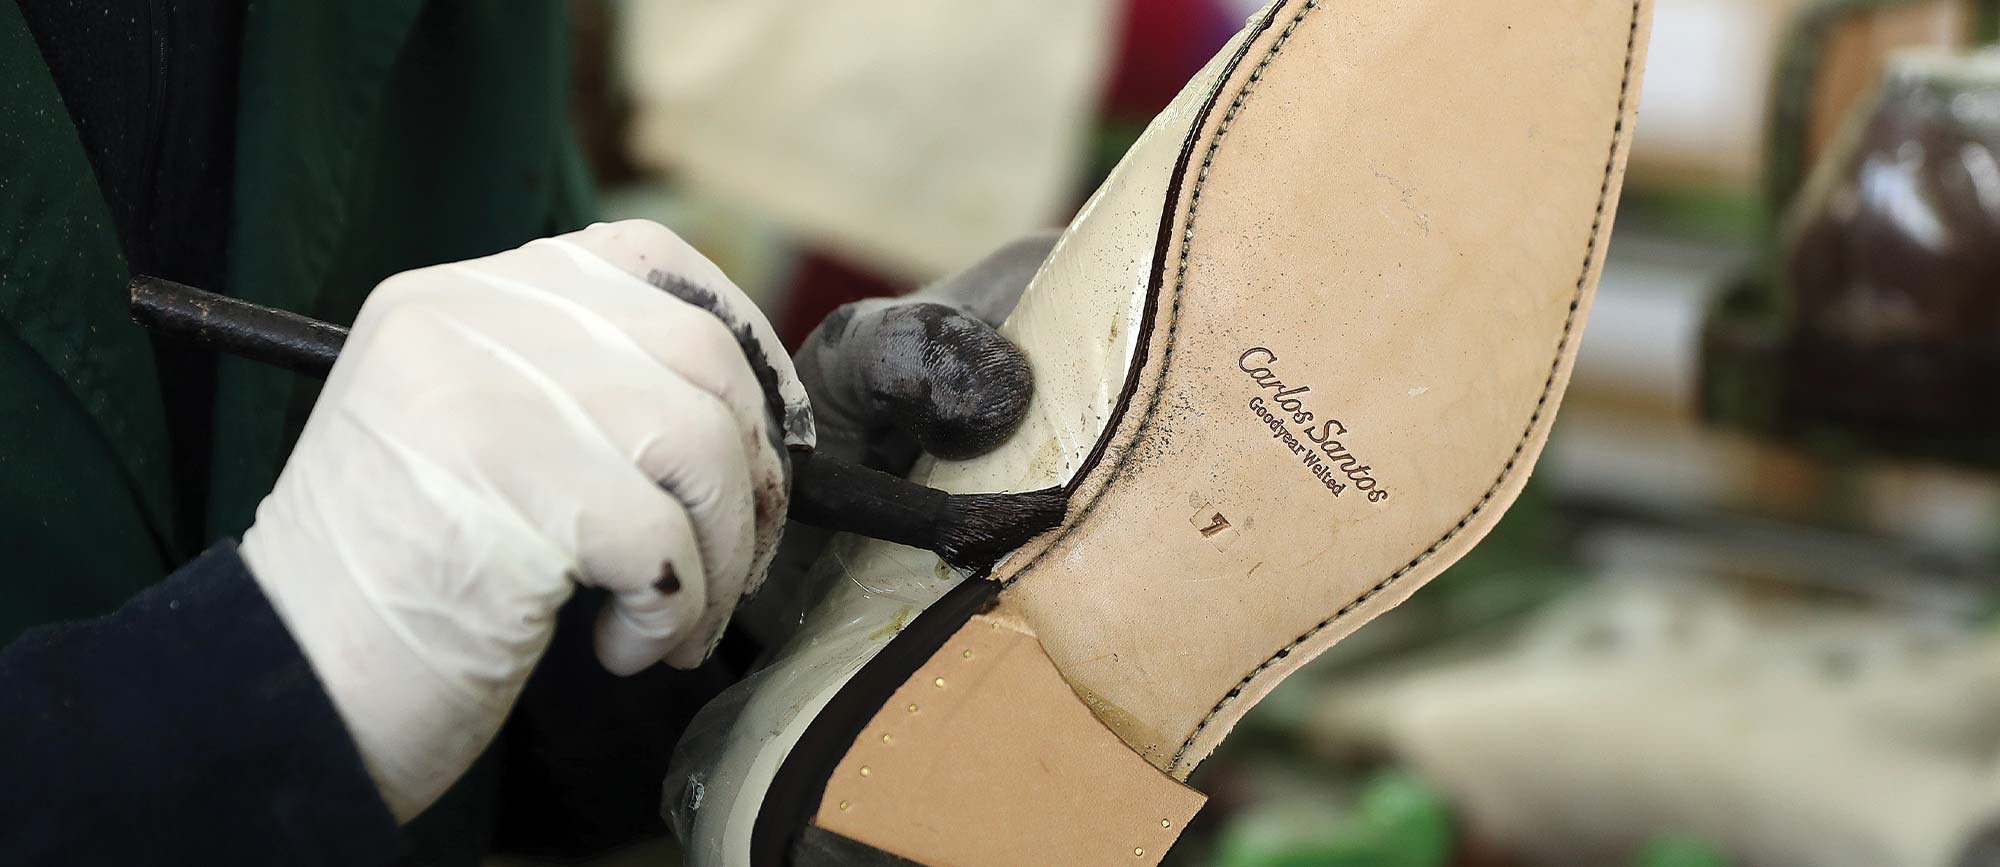 Handgrade Collection | Carlos Santos Shoes - Luxury shoes for men